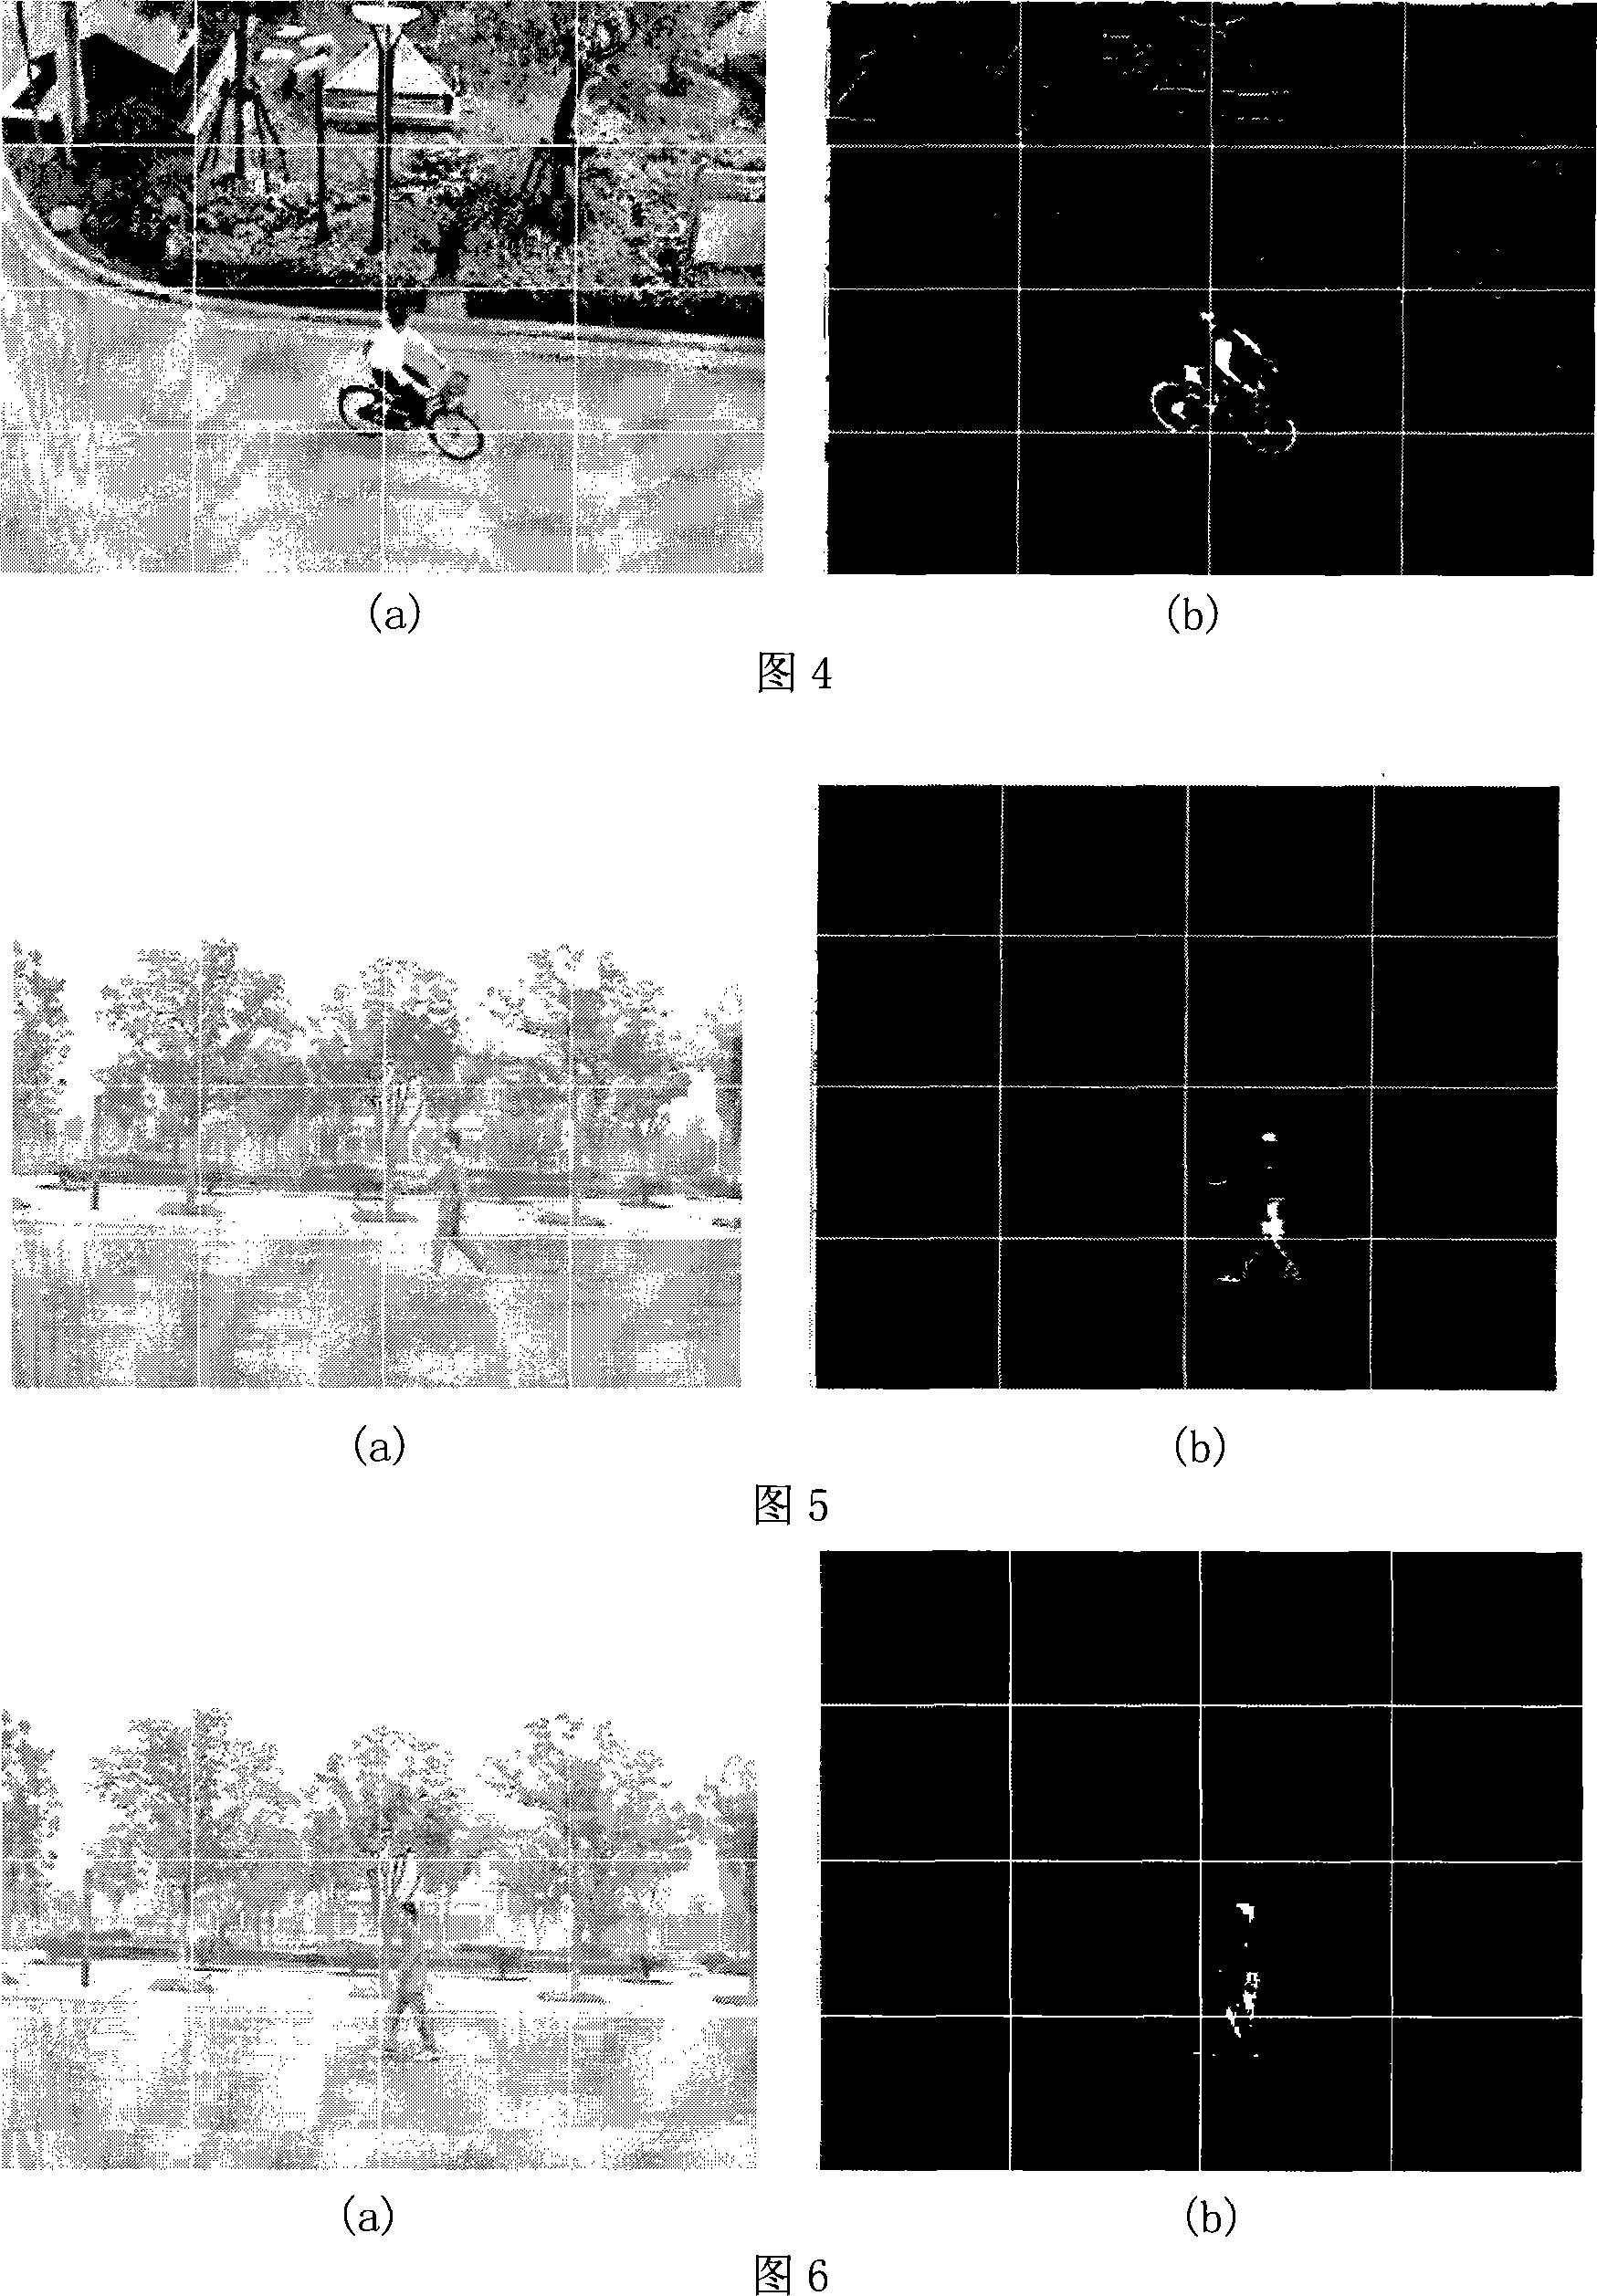 Motion estimation method under violent illumination variation based on corner matching and optic flow method